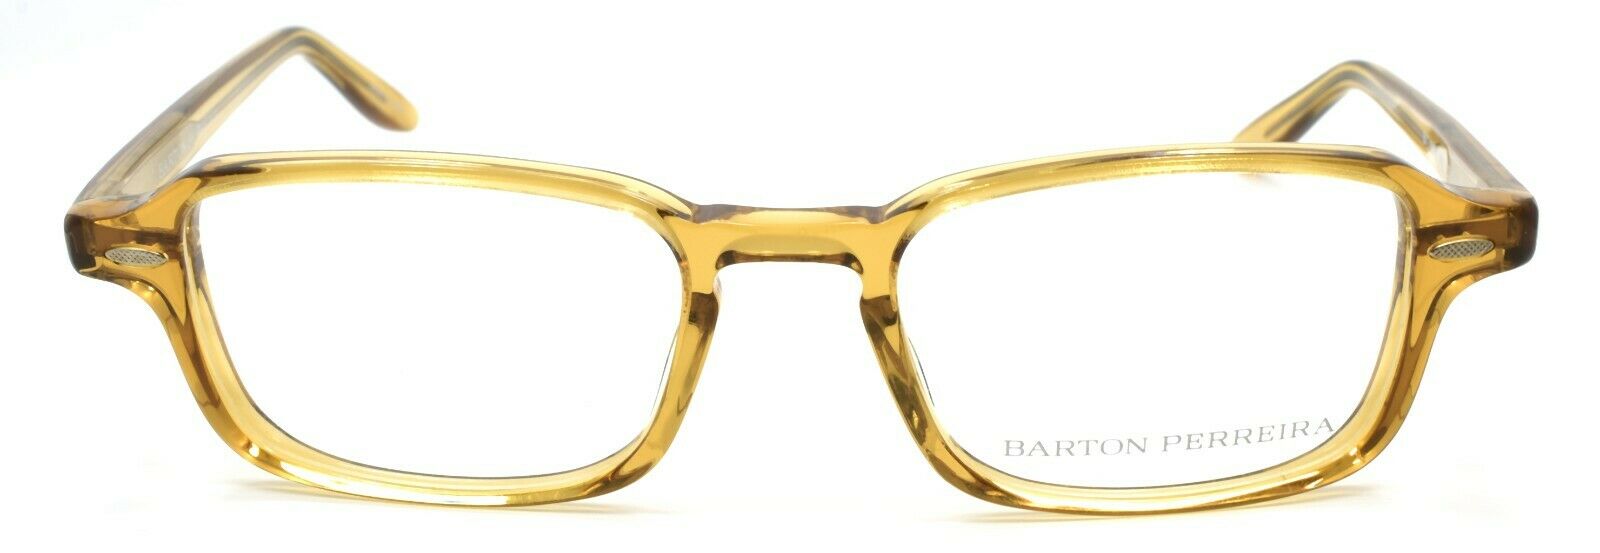 2-Barton Perreira Jeston AMA Unisex Eyeglasses Frames 50-19-145 Amaretto-672263038573-IKSpecs